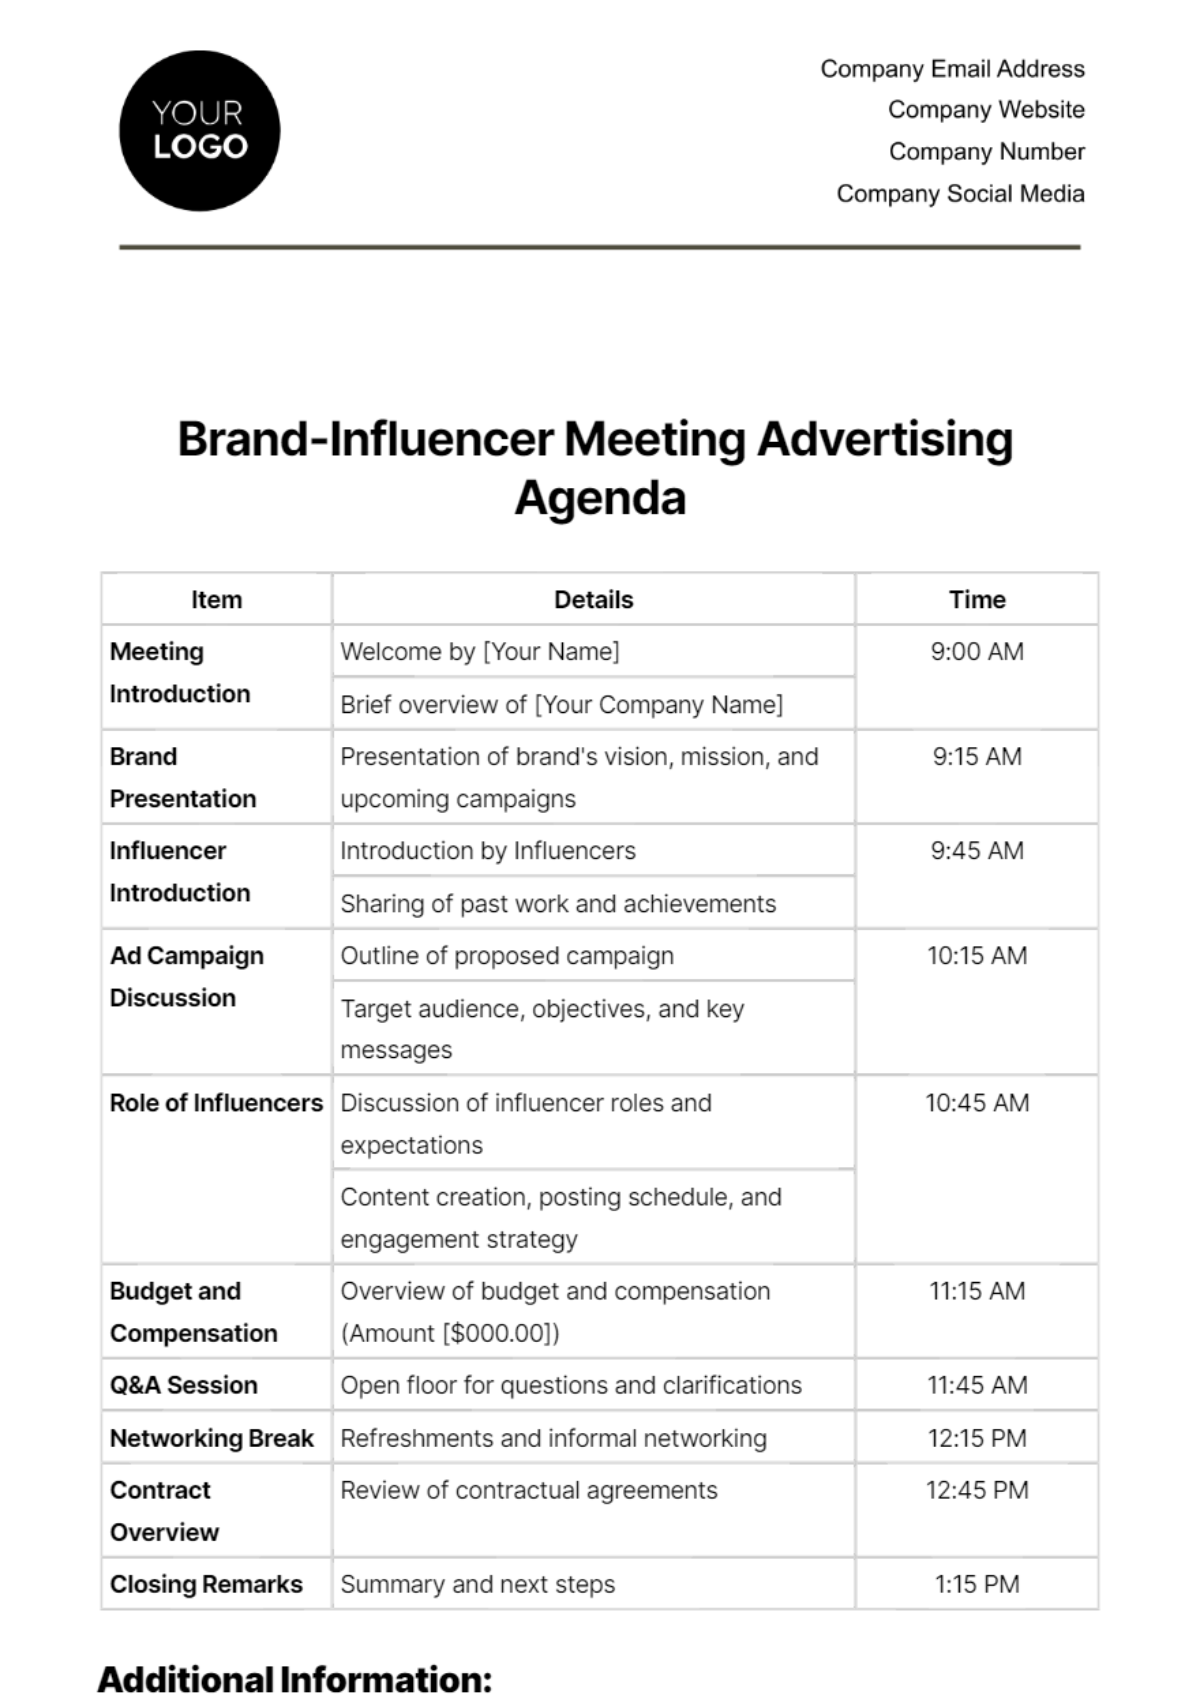 Brand-Influencer Meeting Advertising Agenda Template